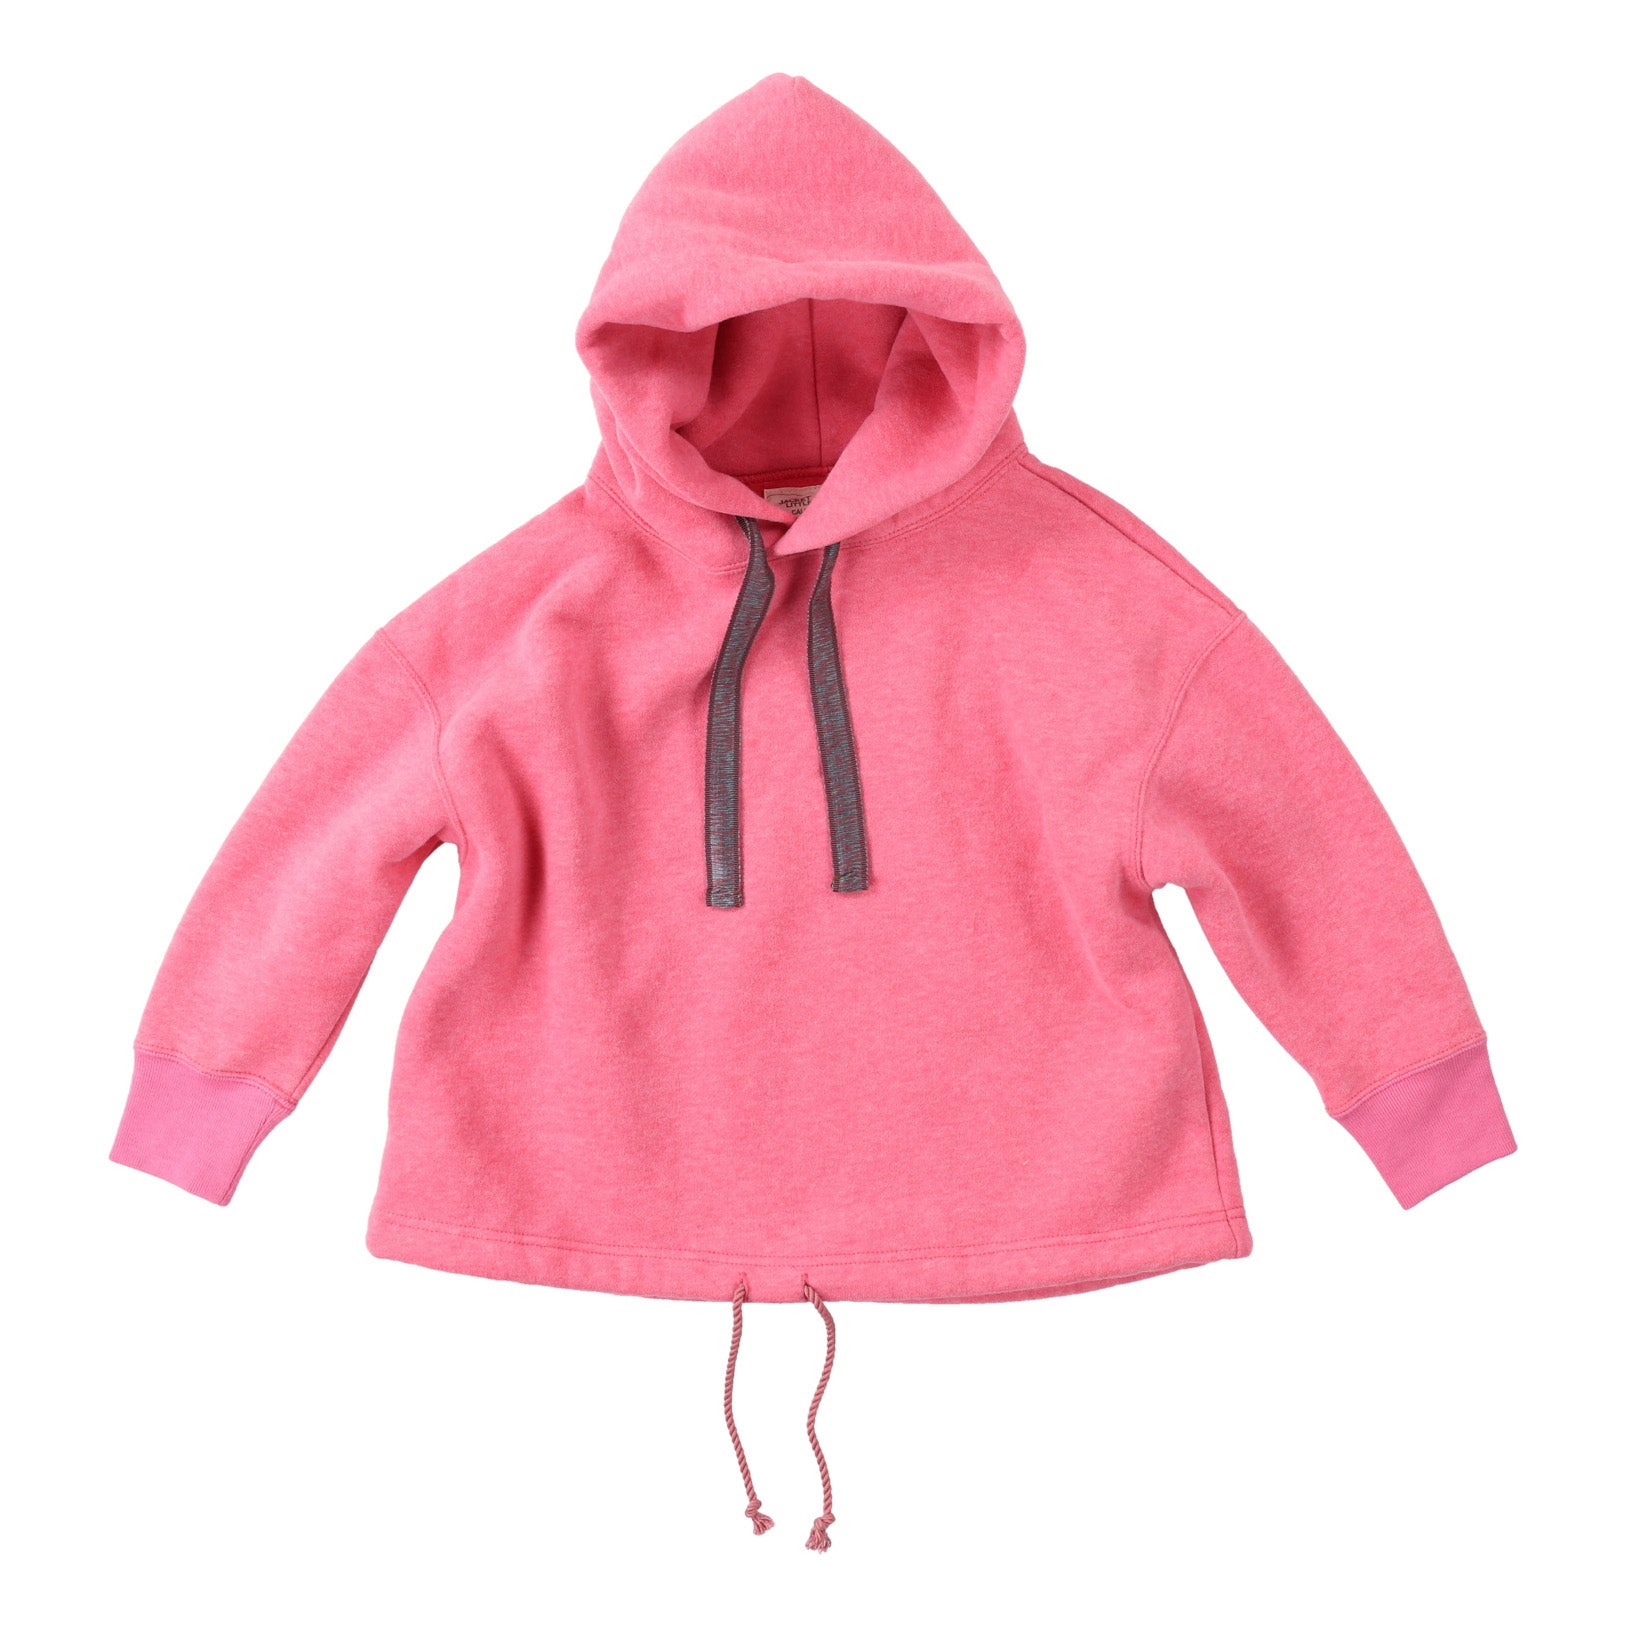 Boys Pink Hooded Sweatshirt